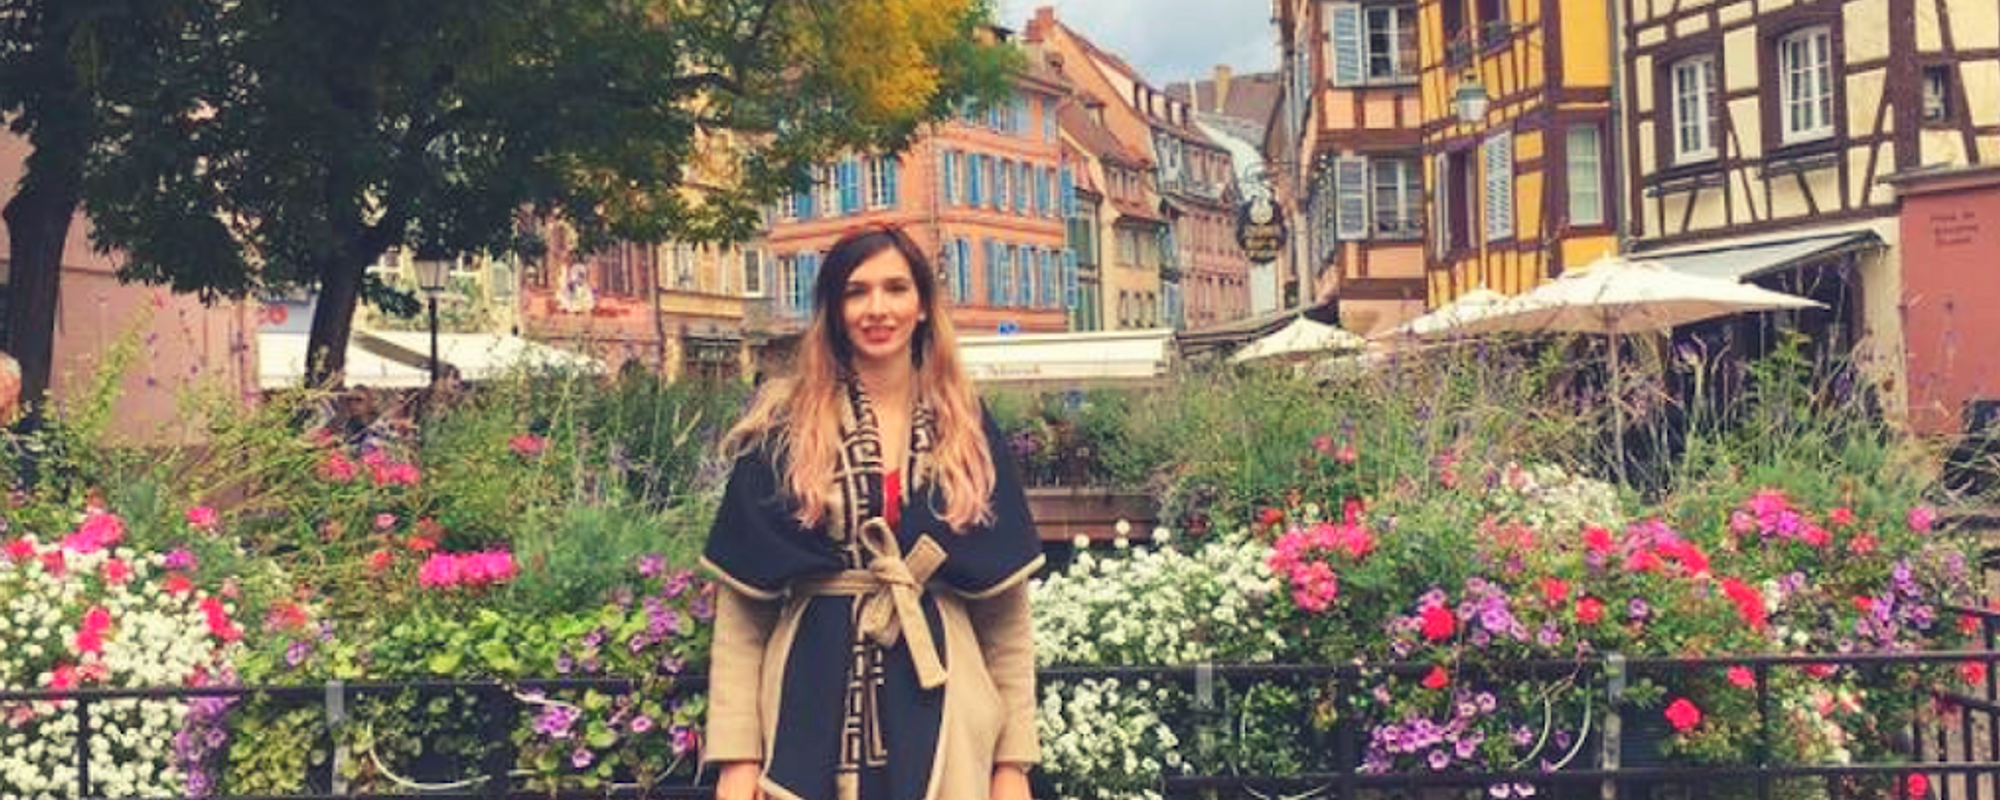 A TRUE fairytale village - Colmar